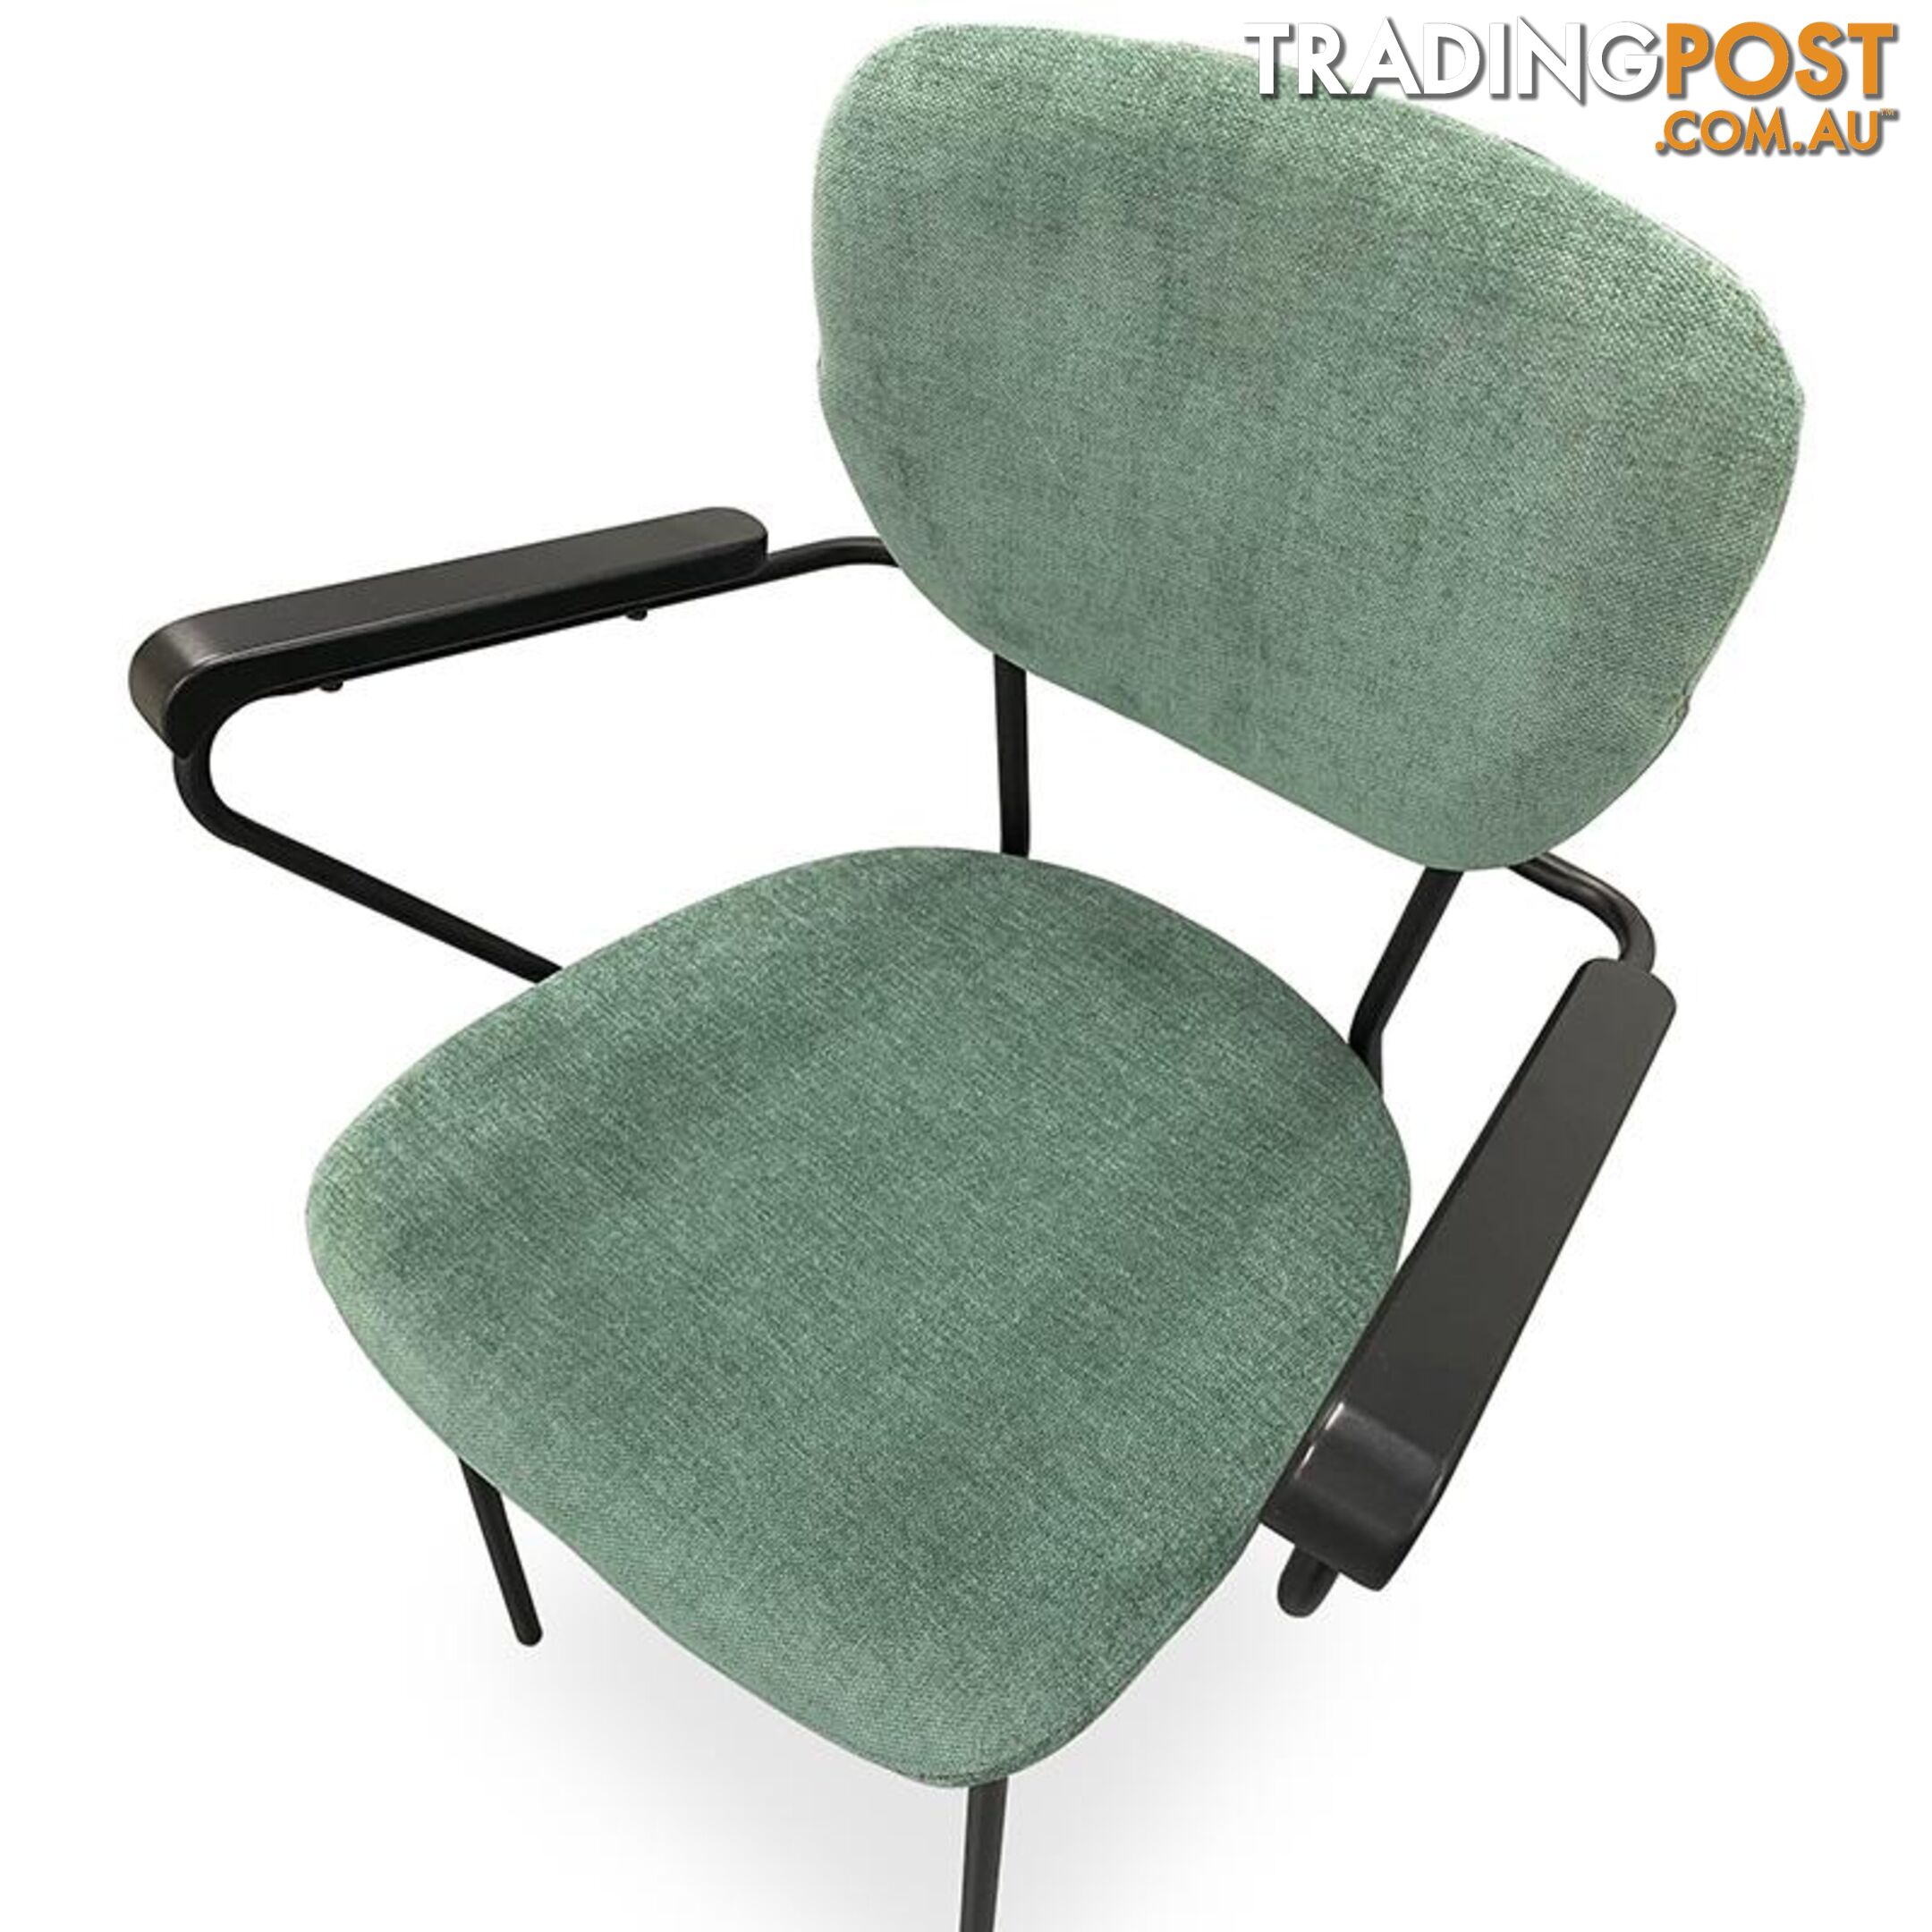 KELBY Arm Chair - Jade + Black - DI-J1928-1 - 9334719001654